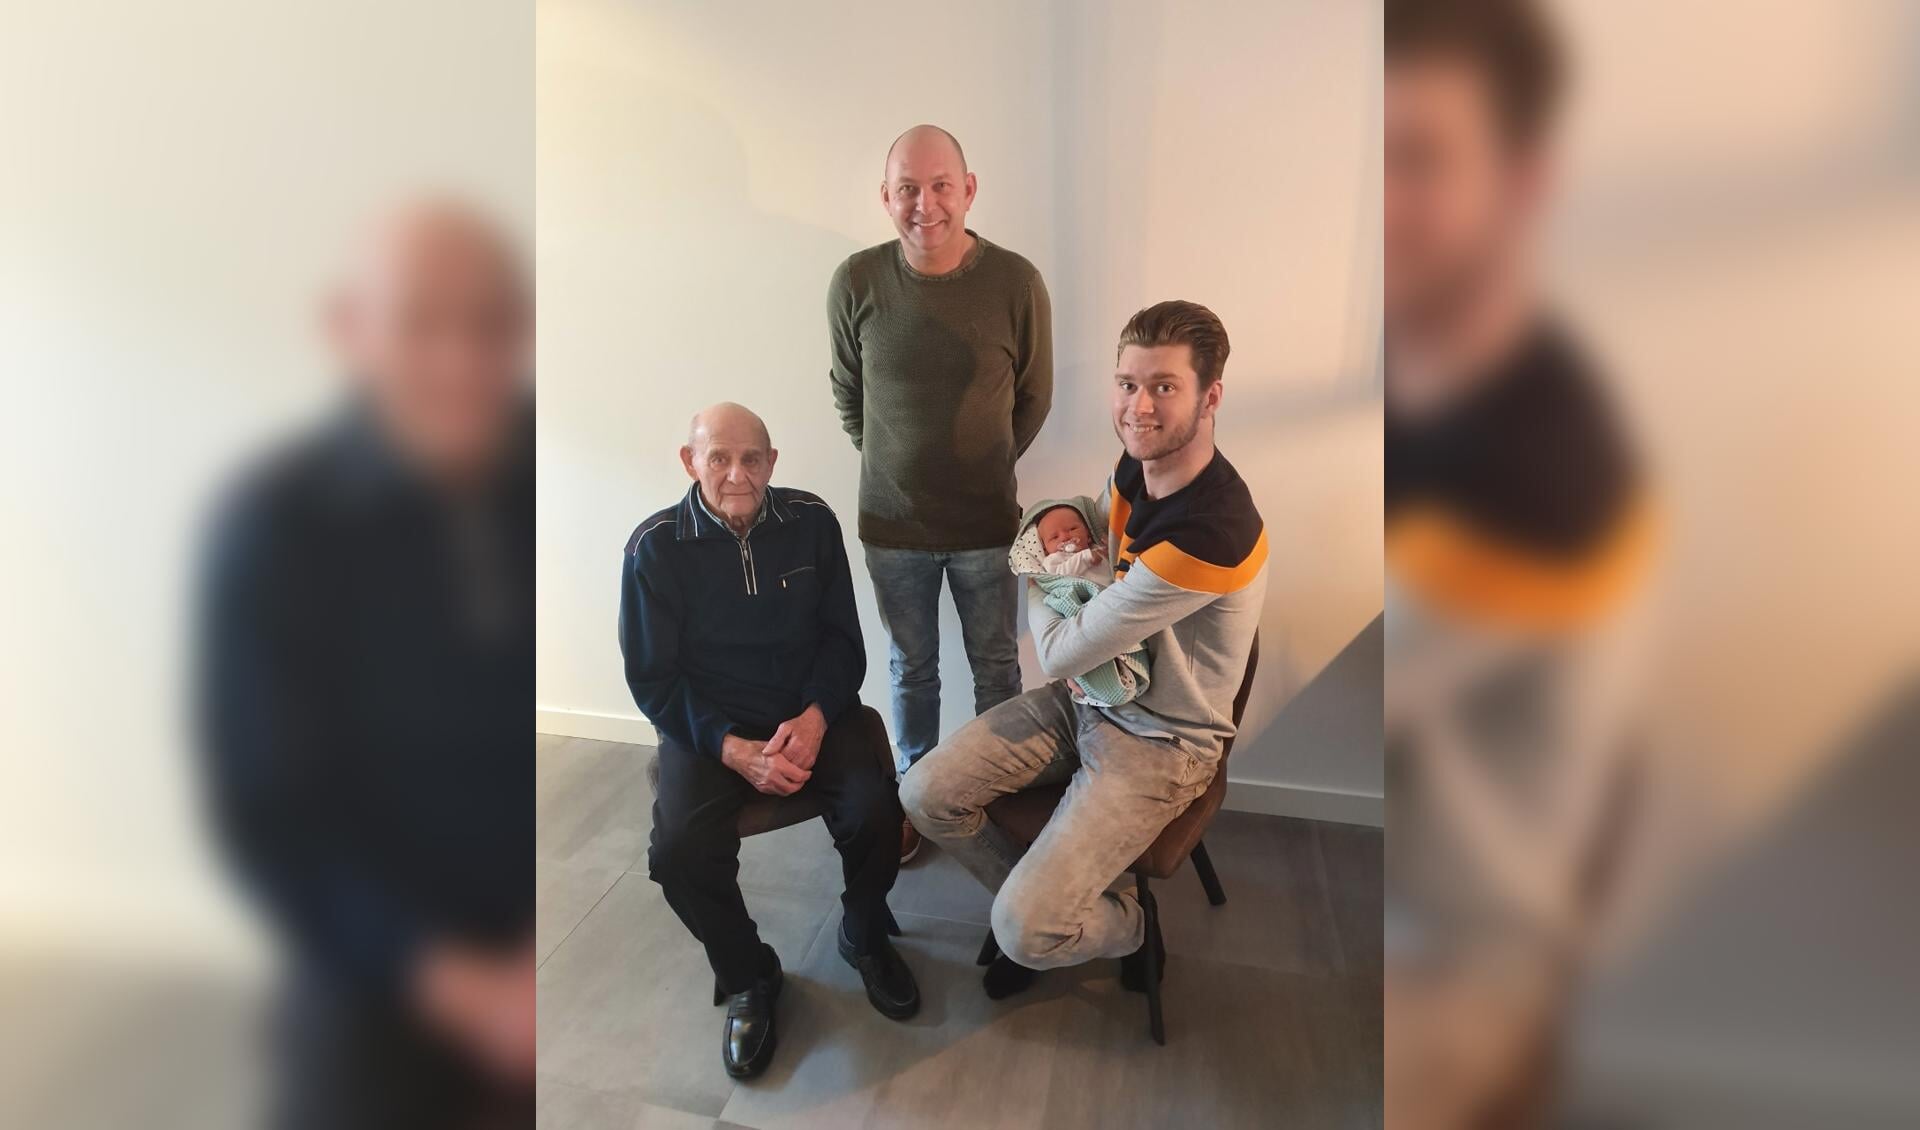 December 2019, vlnr: Bert sr., Bert jr., Sander met Sten